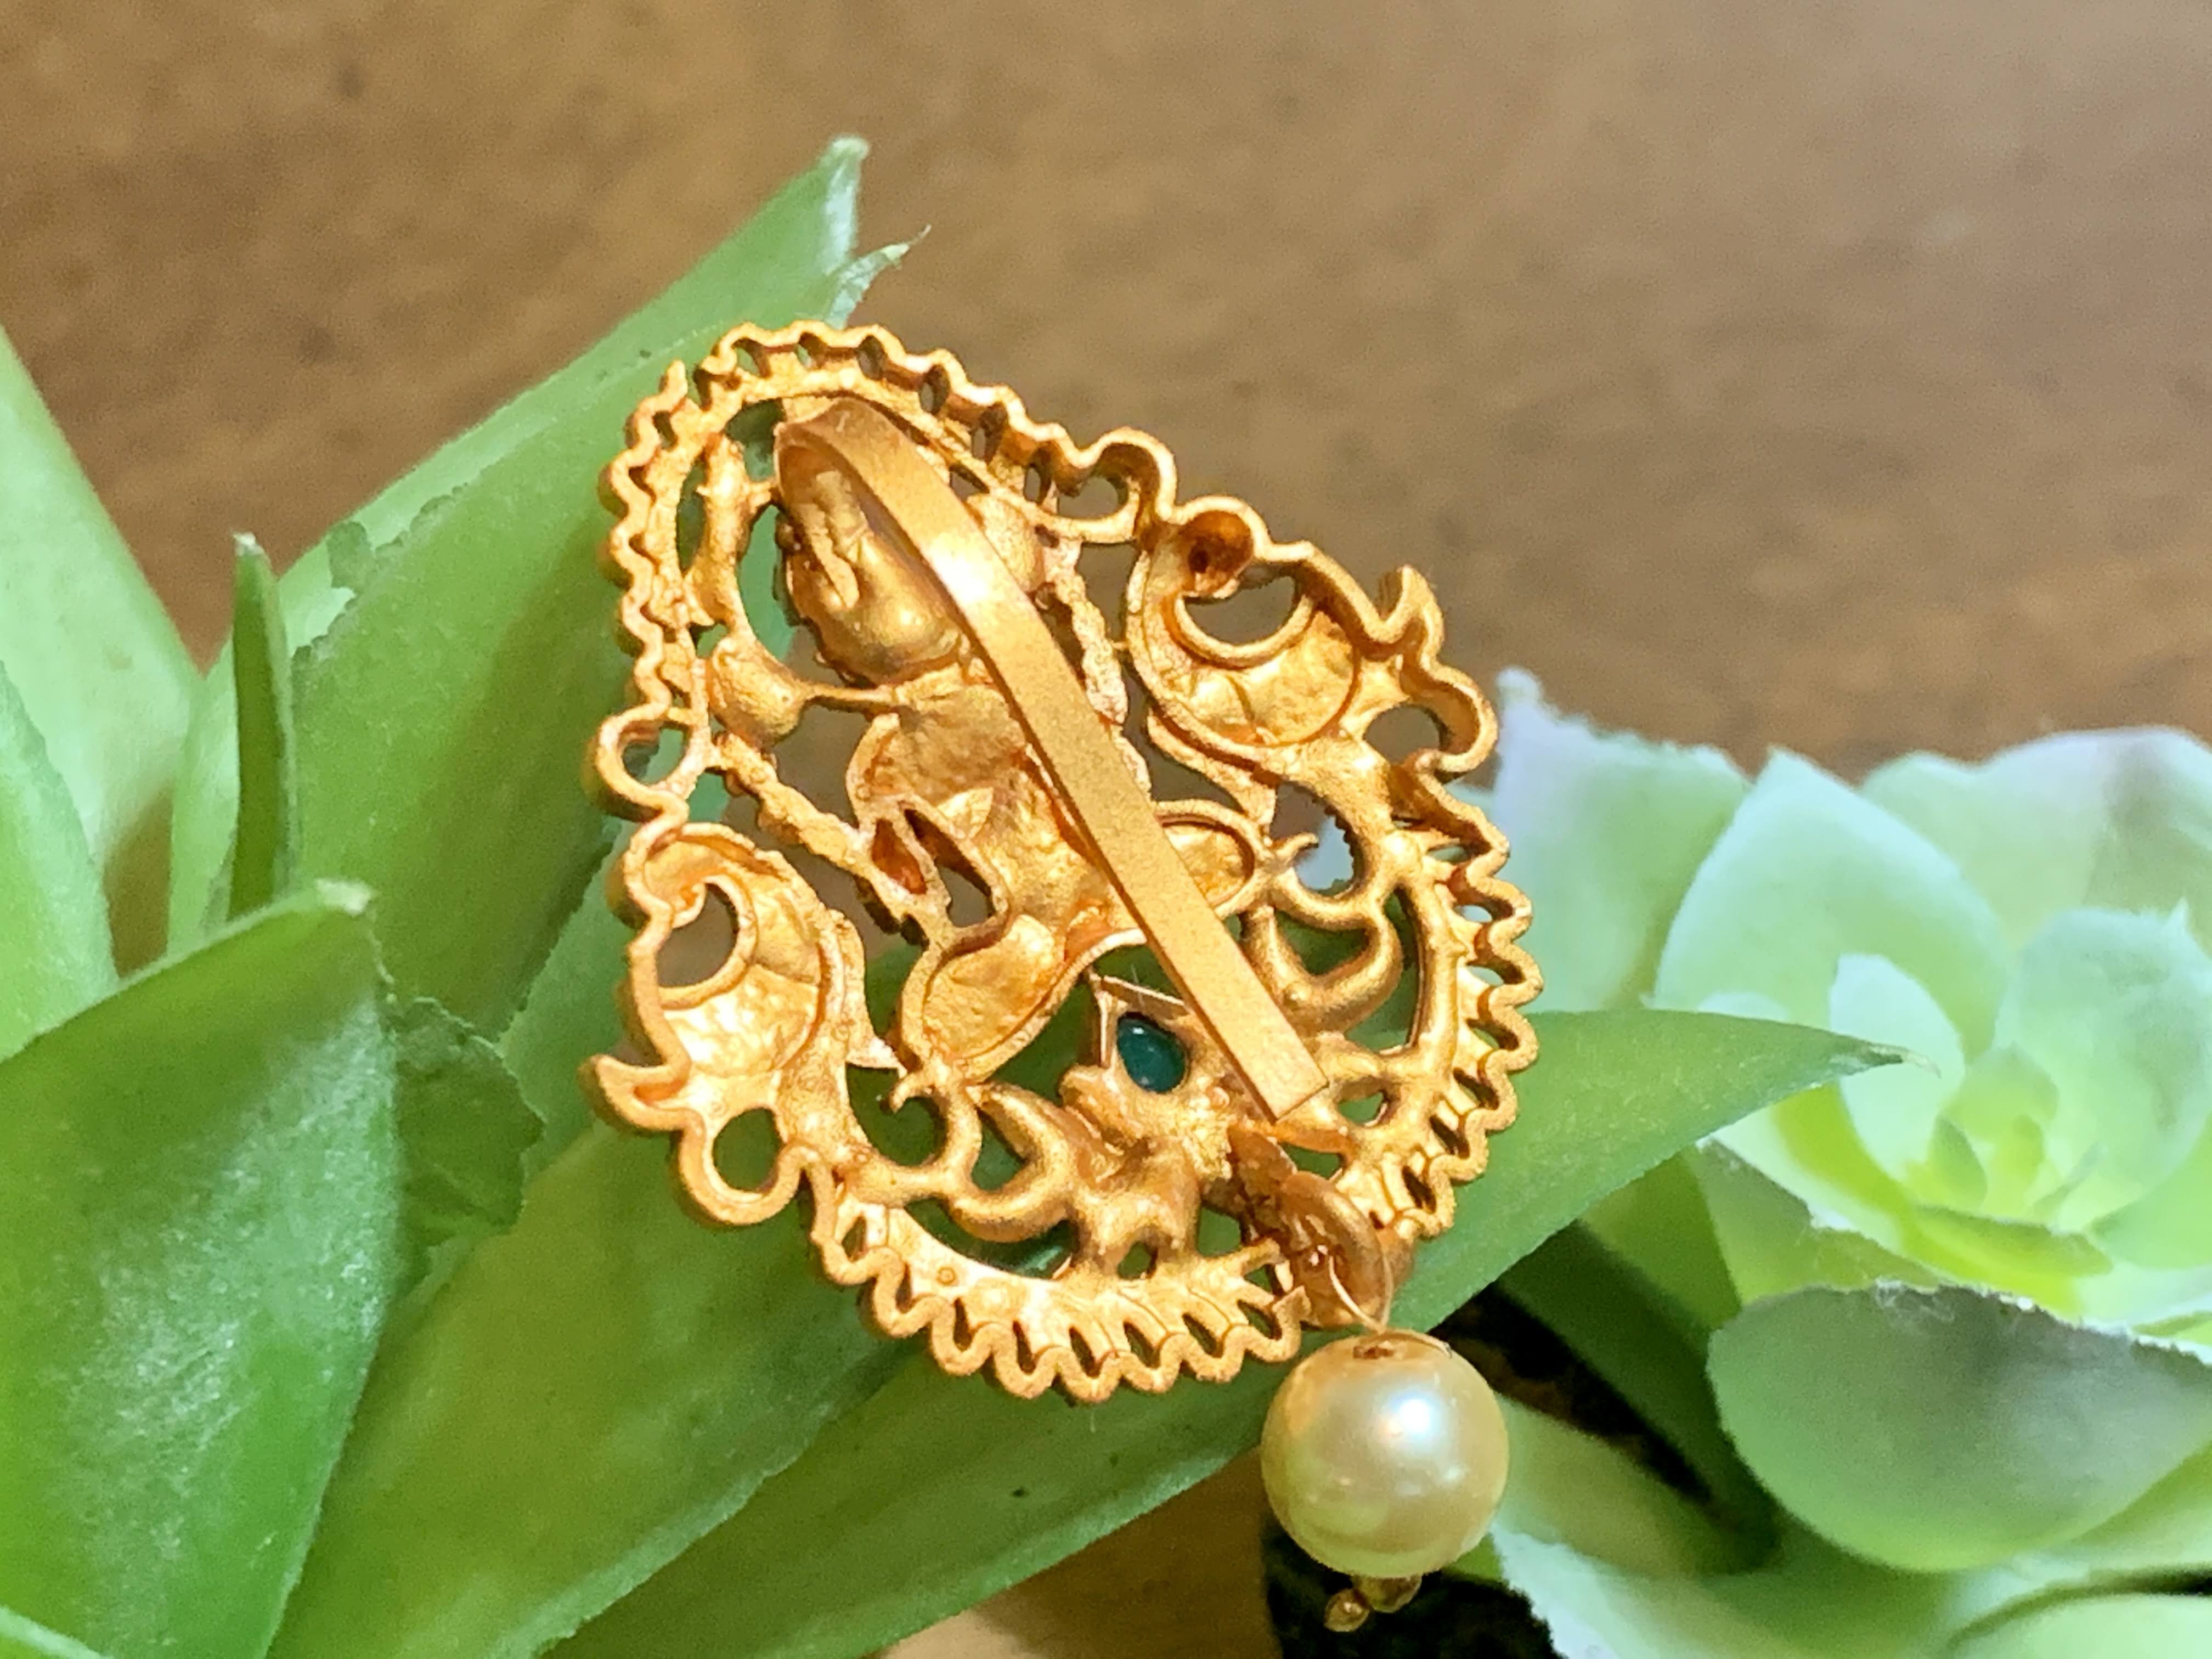 Goddess Lakshmi - Temple Jewelry - Hair Clip- Jewel Stone Studded